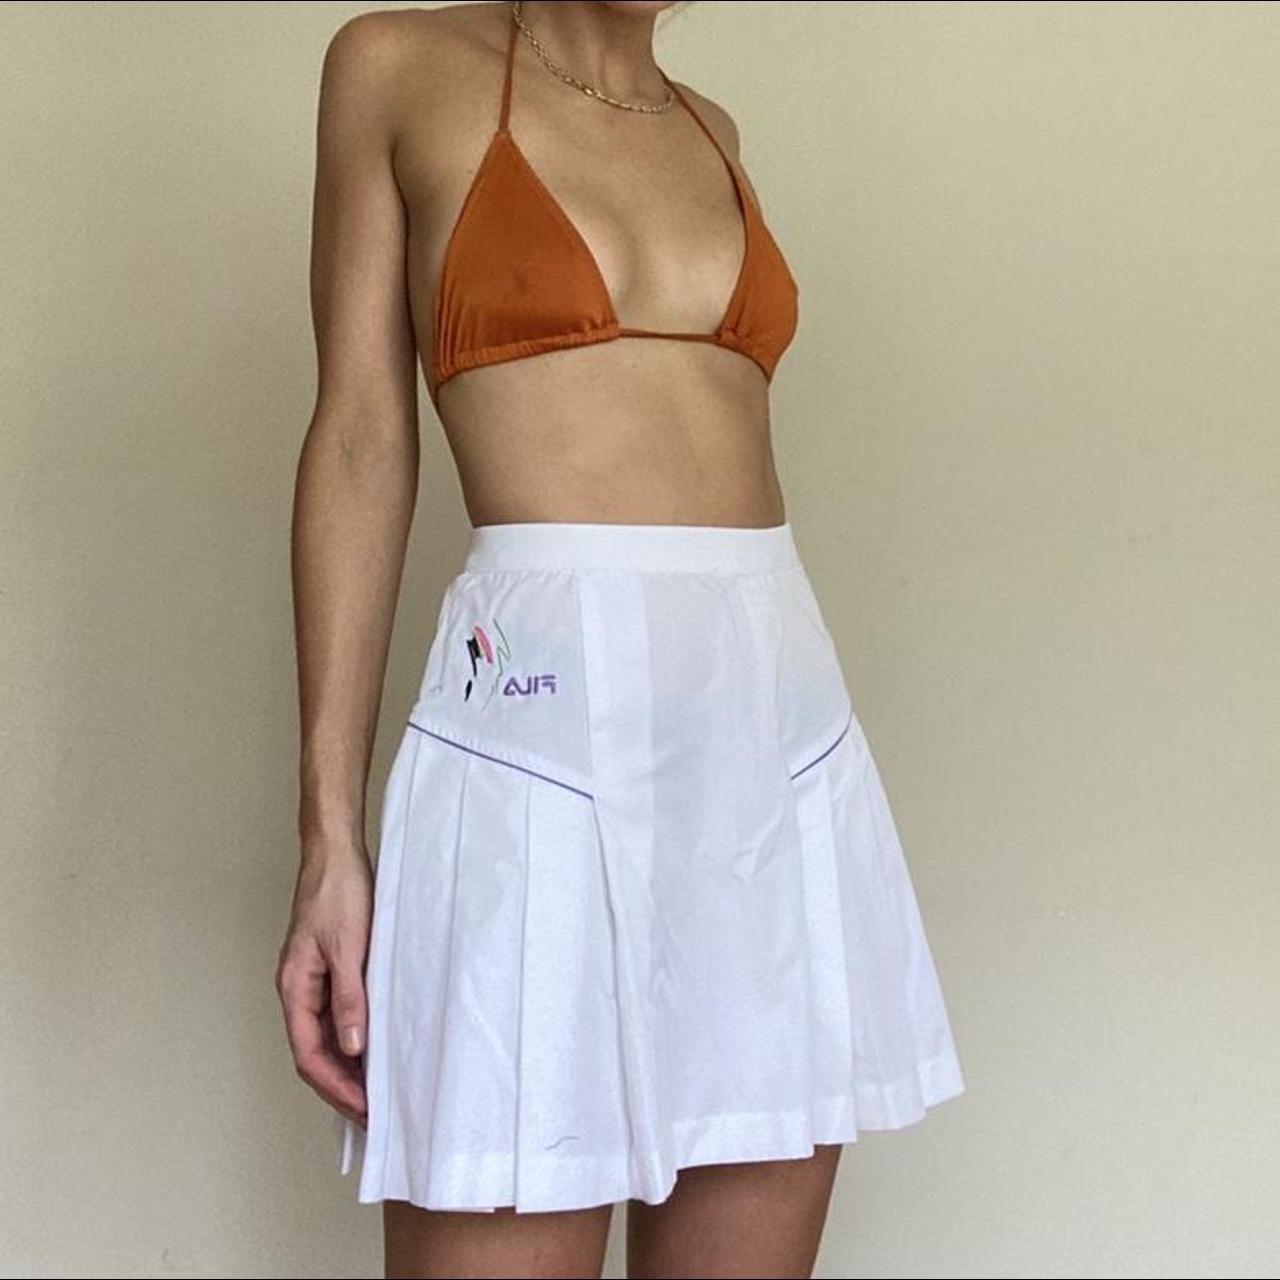 Zimmermann Women's Orange and Tan Bikini-and-tankini-tops (2)